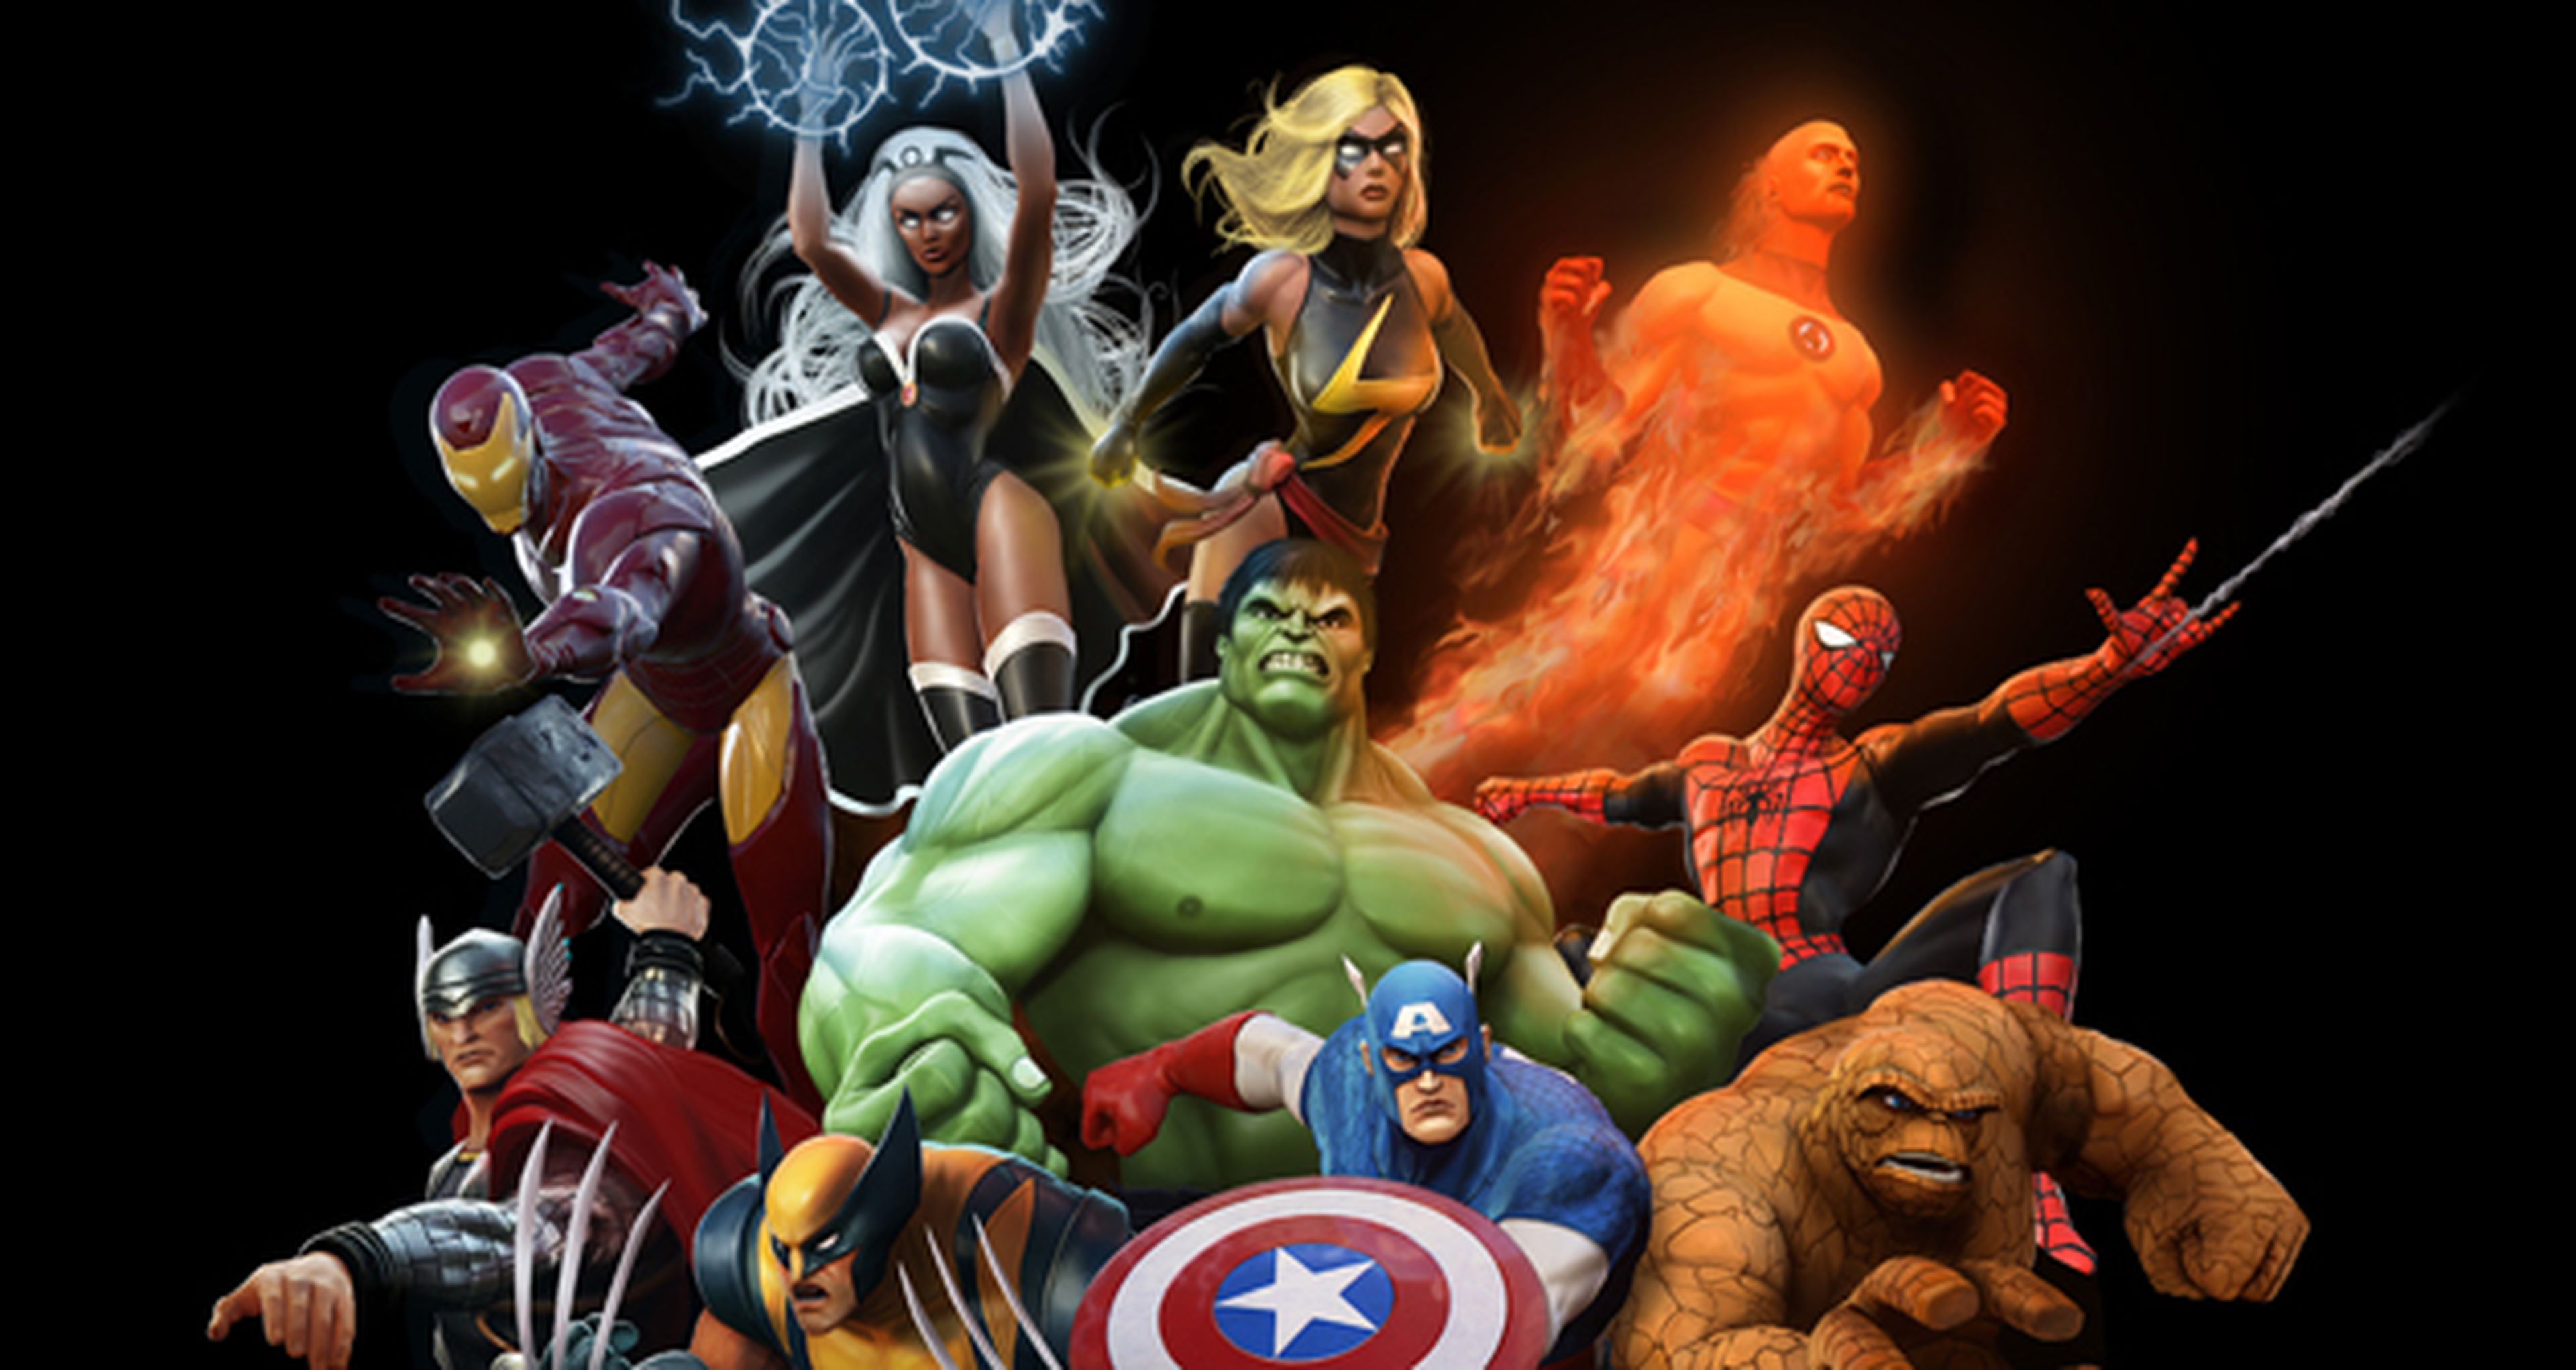 Marvel Heroes ya tiene fecha